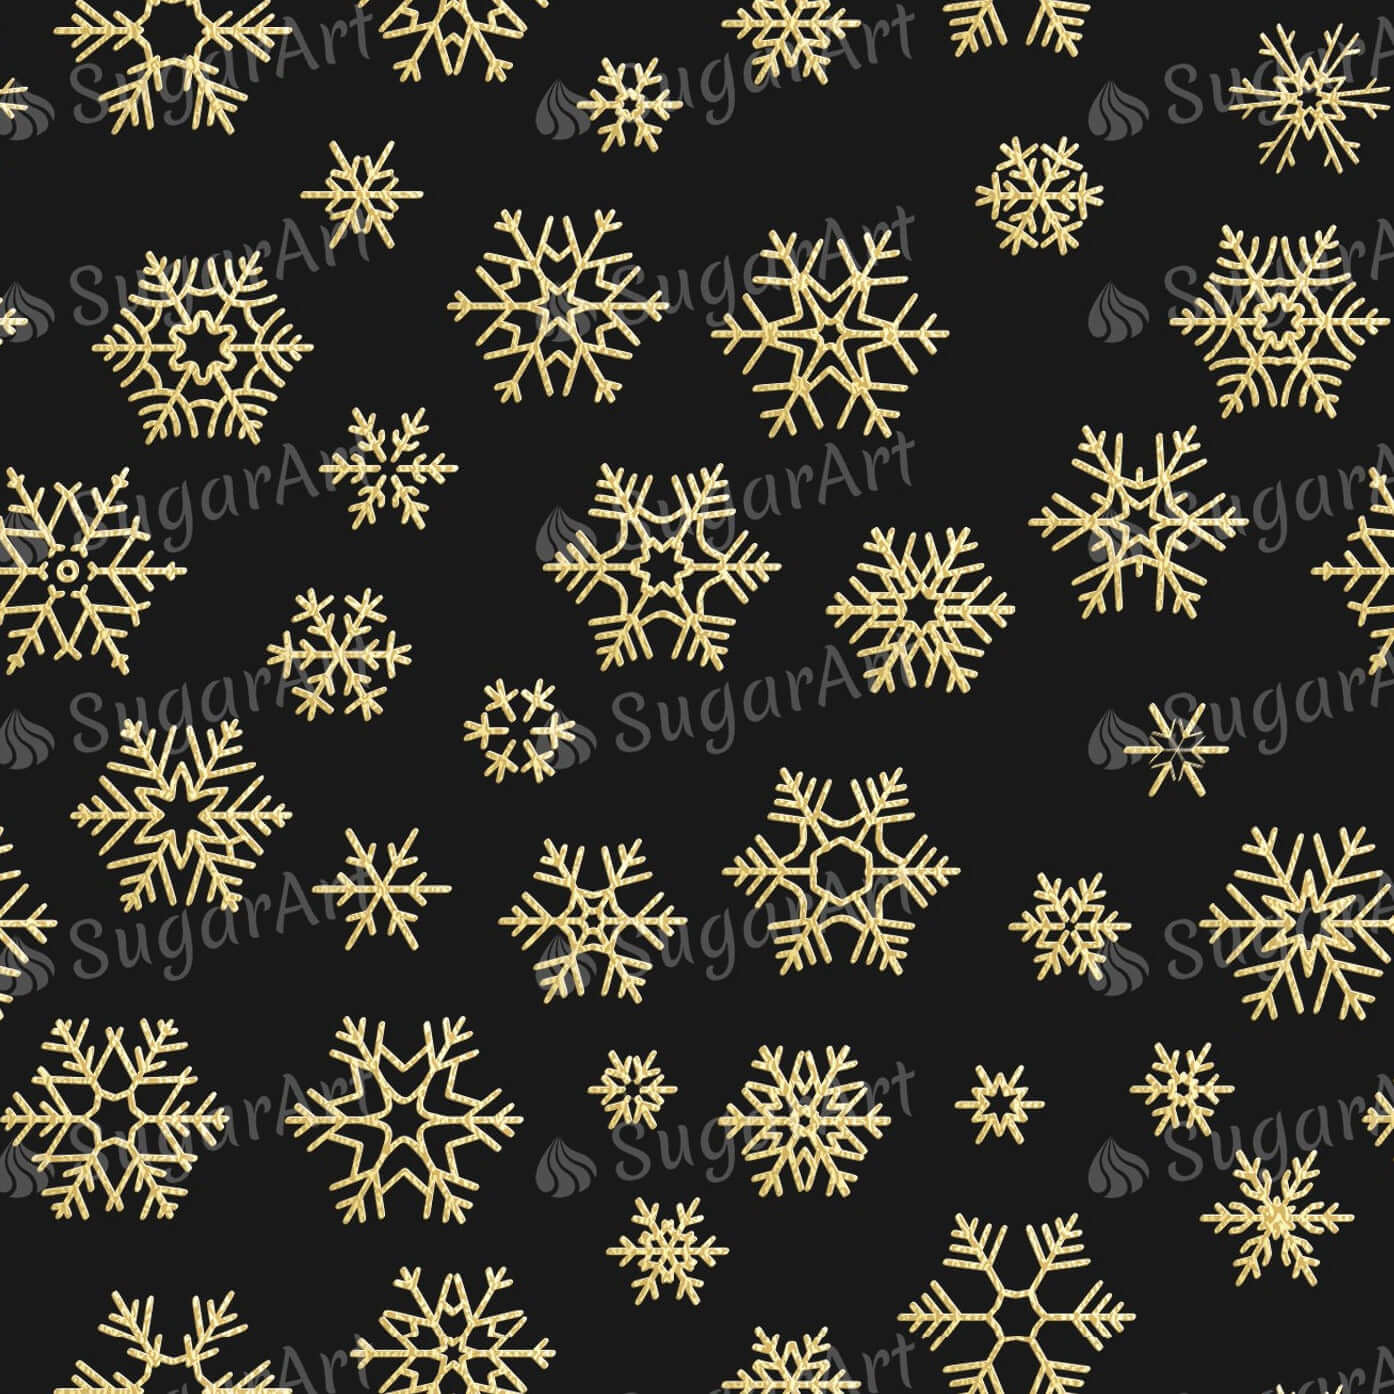 Golden Snowflakes on Black Background - BSA077.